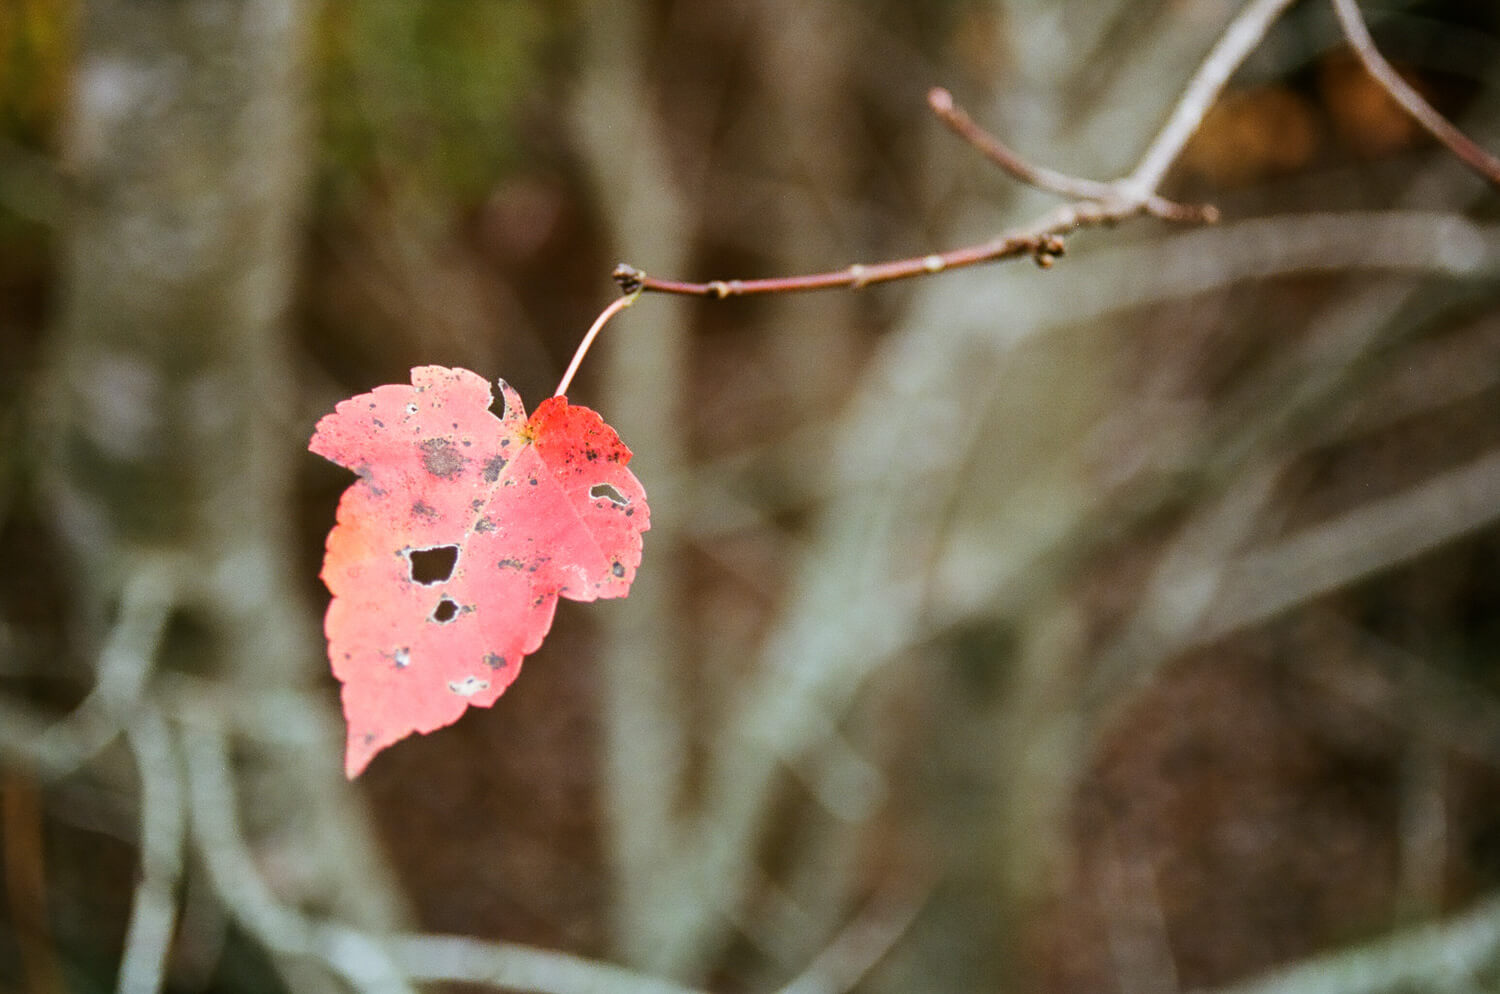 Last leaf, last day - November 5 9:46 AM